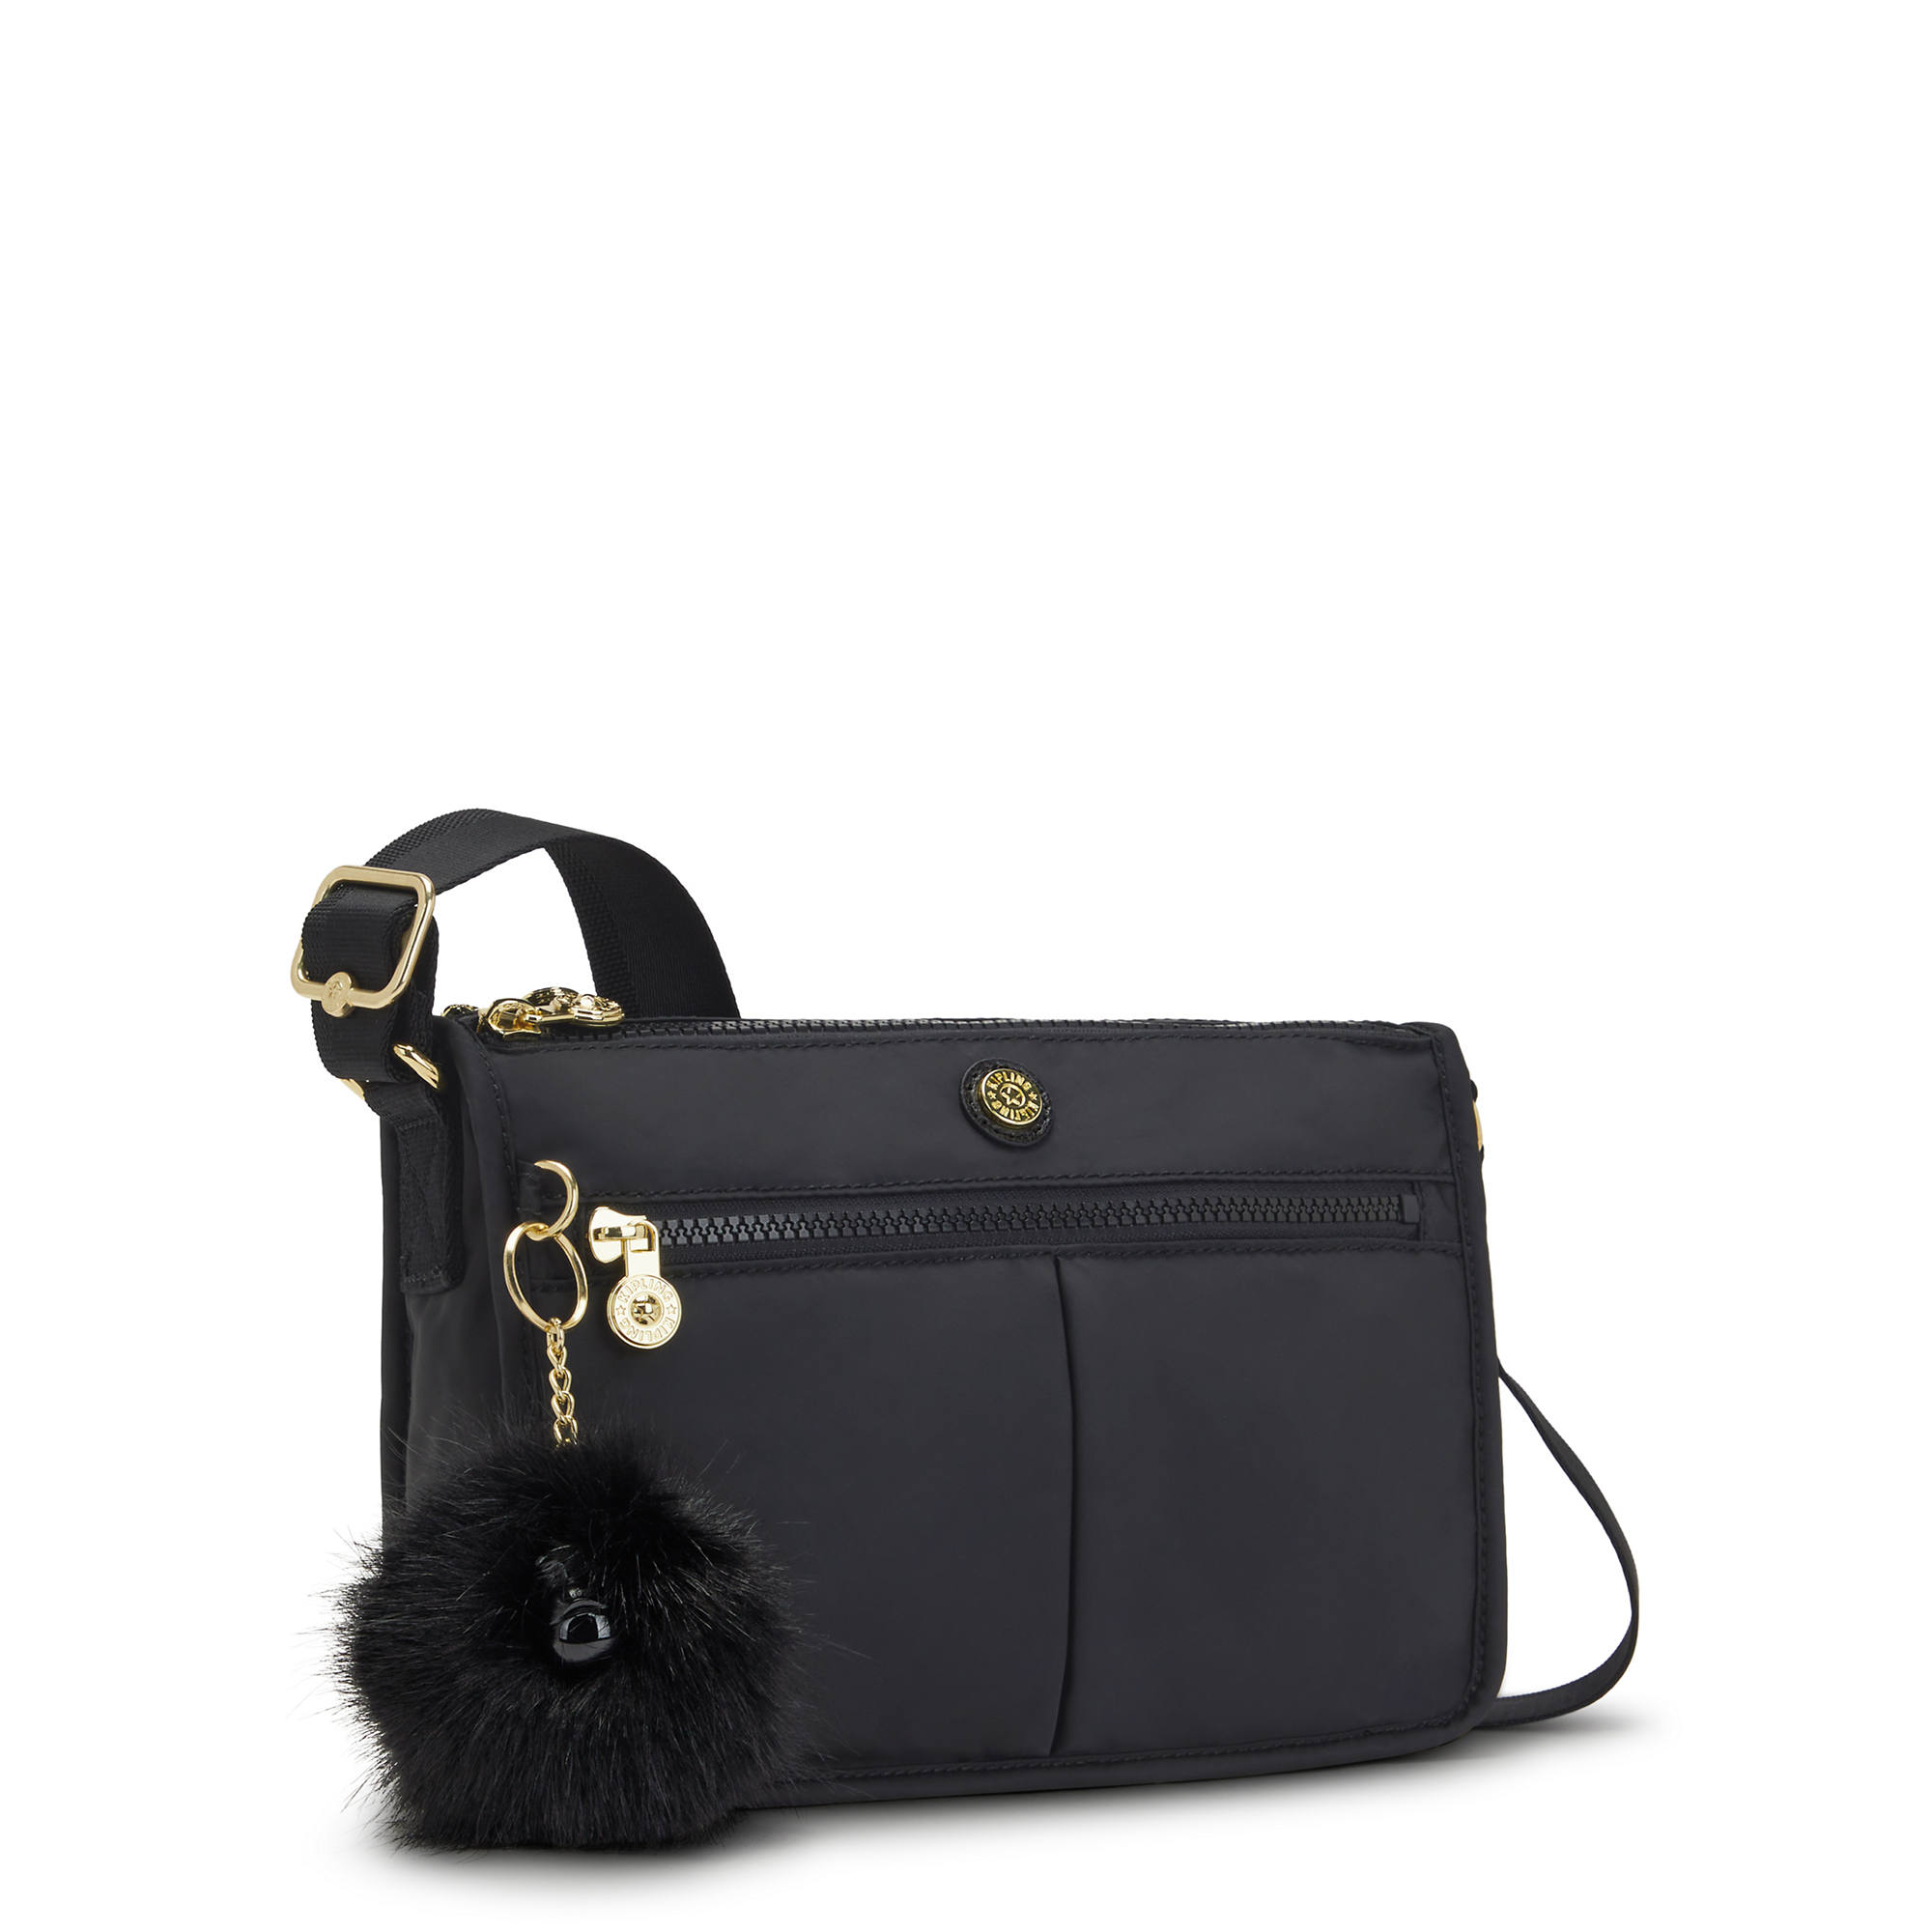 Kipling Hailey Crossbody Bag | eBay